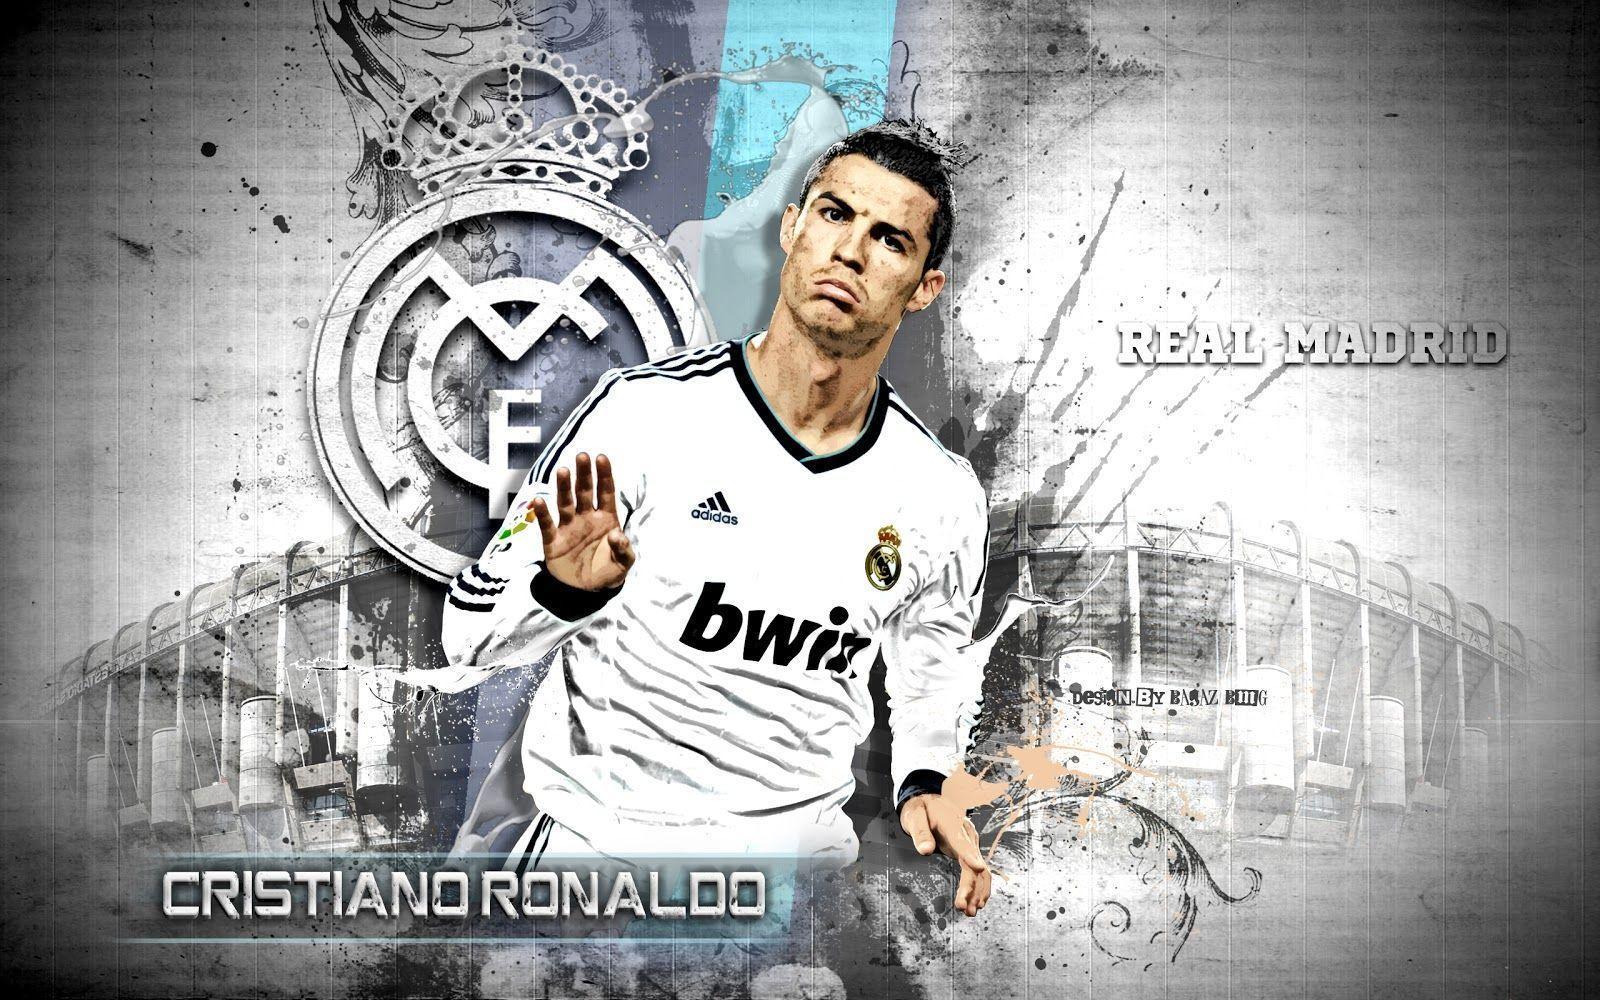 Cristiano Ronaldo Wallpaper HD wallpaper. Wallpaper